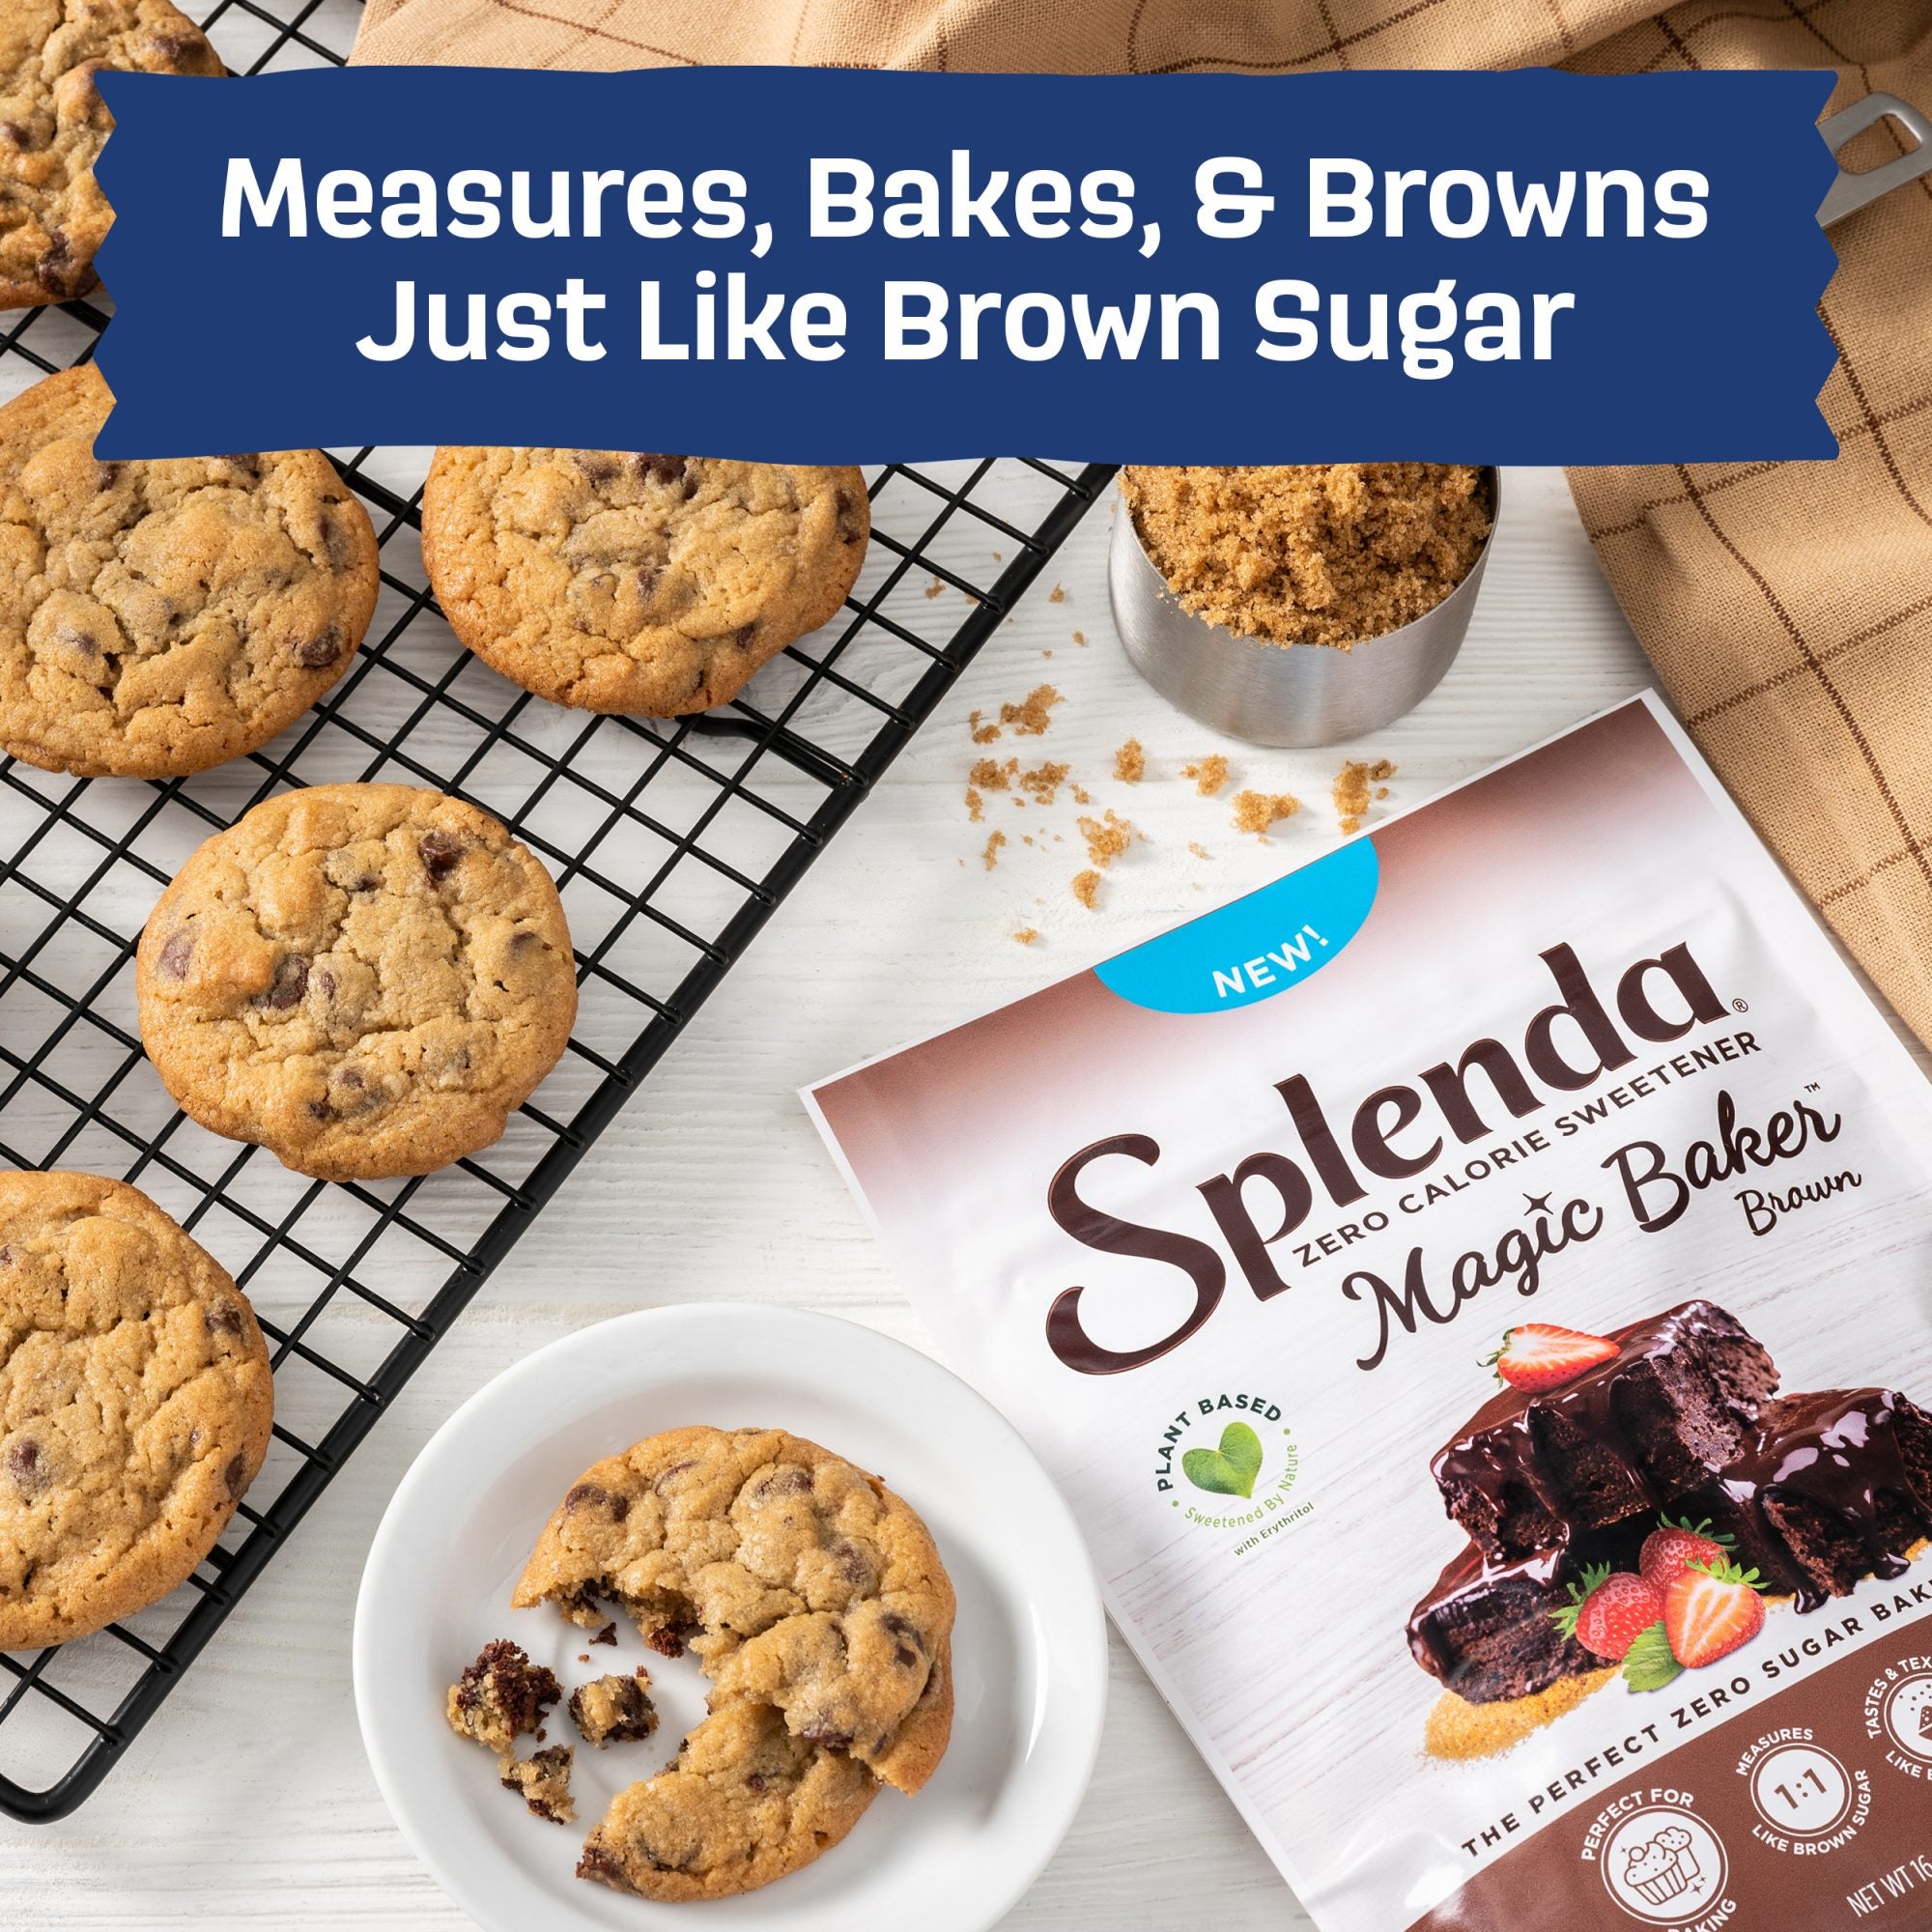 Splenda Magic Baker Brown 16oz Pouch - Measures, Bakes, and Browns Just Like Brown Sugar